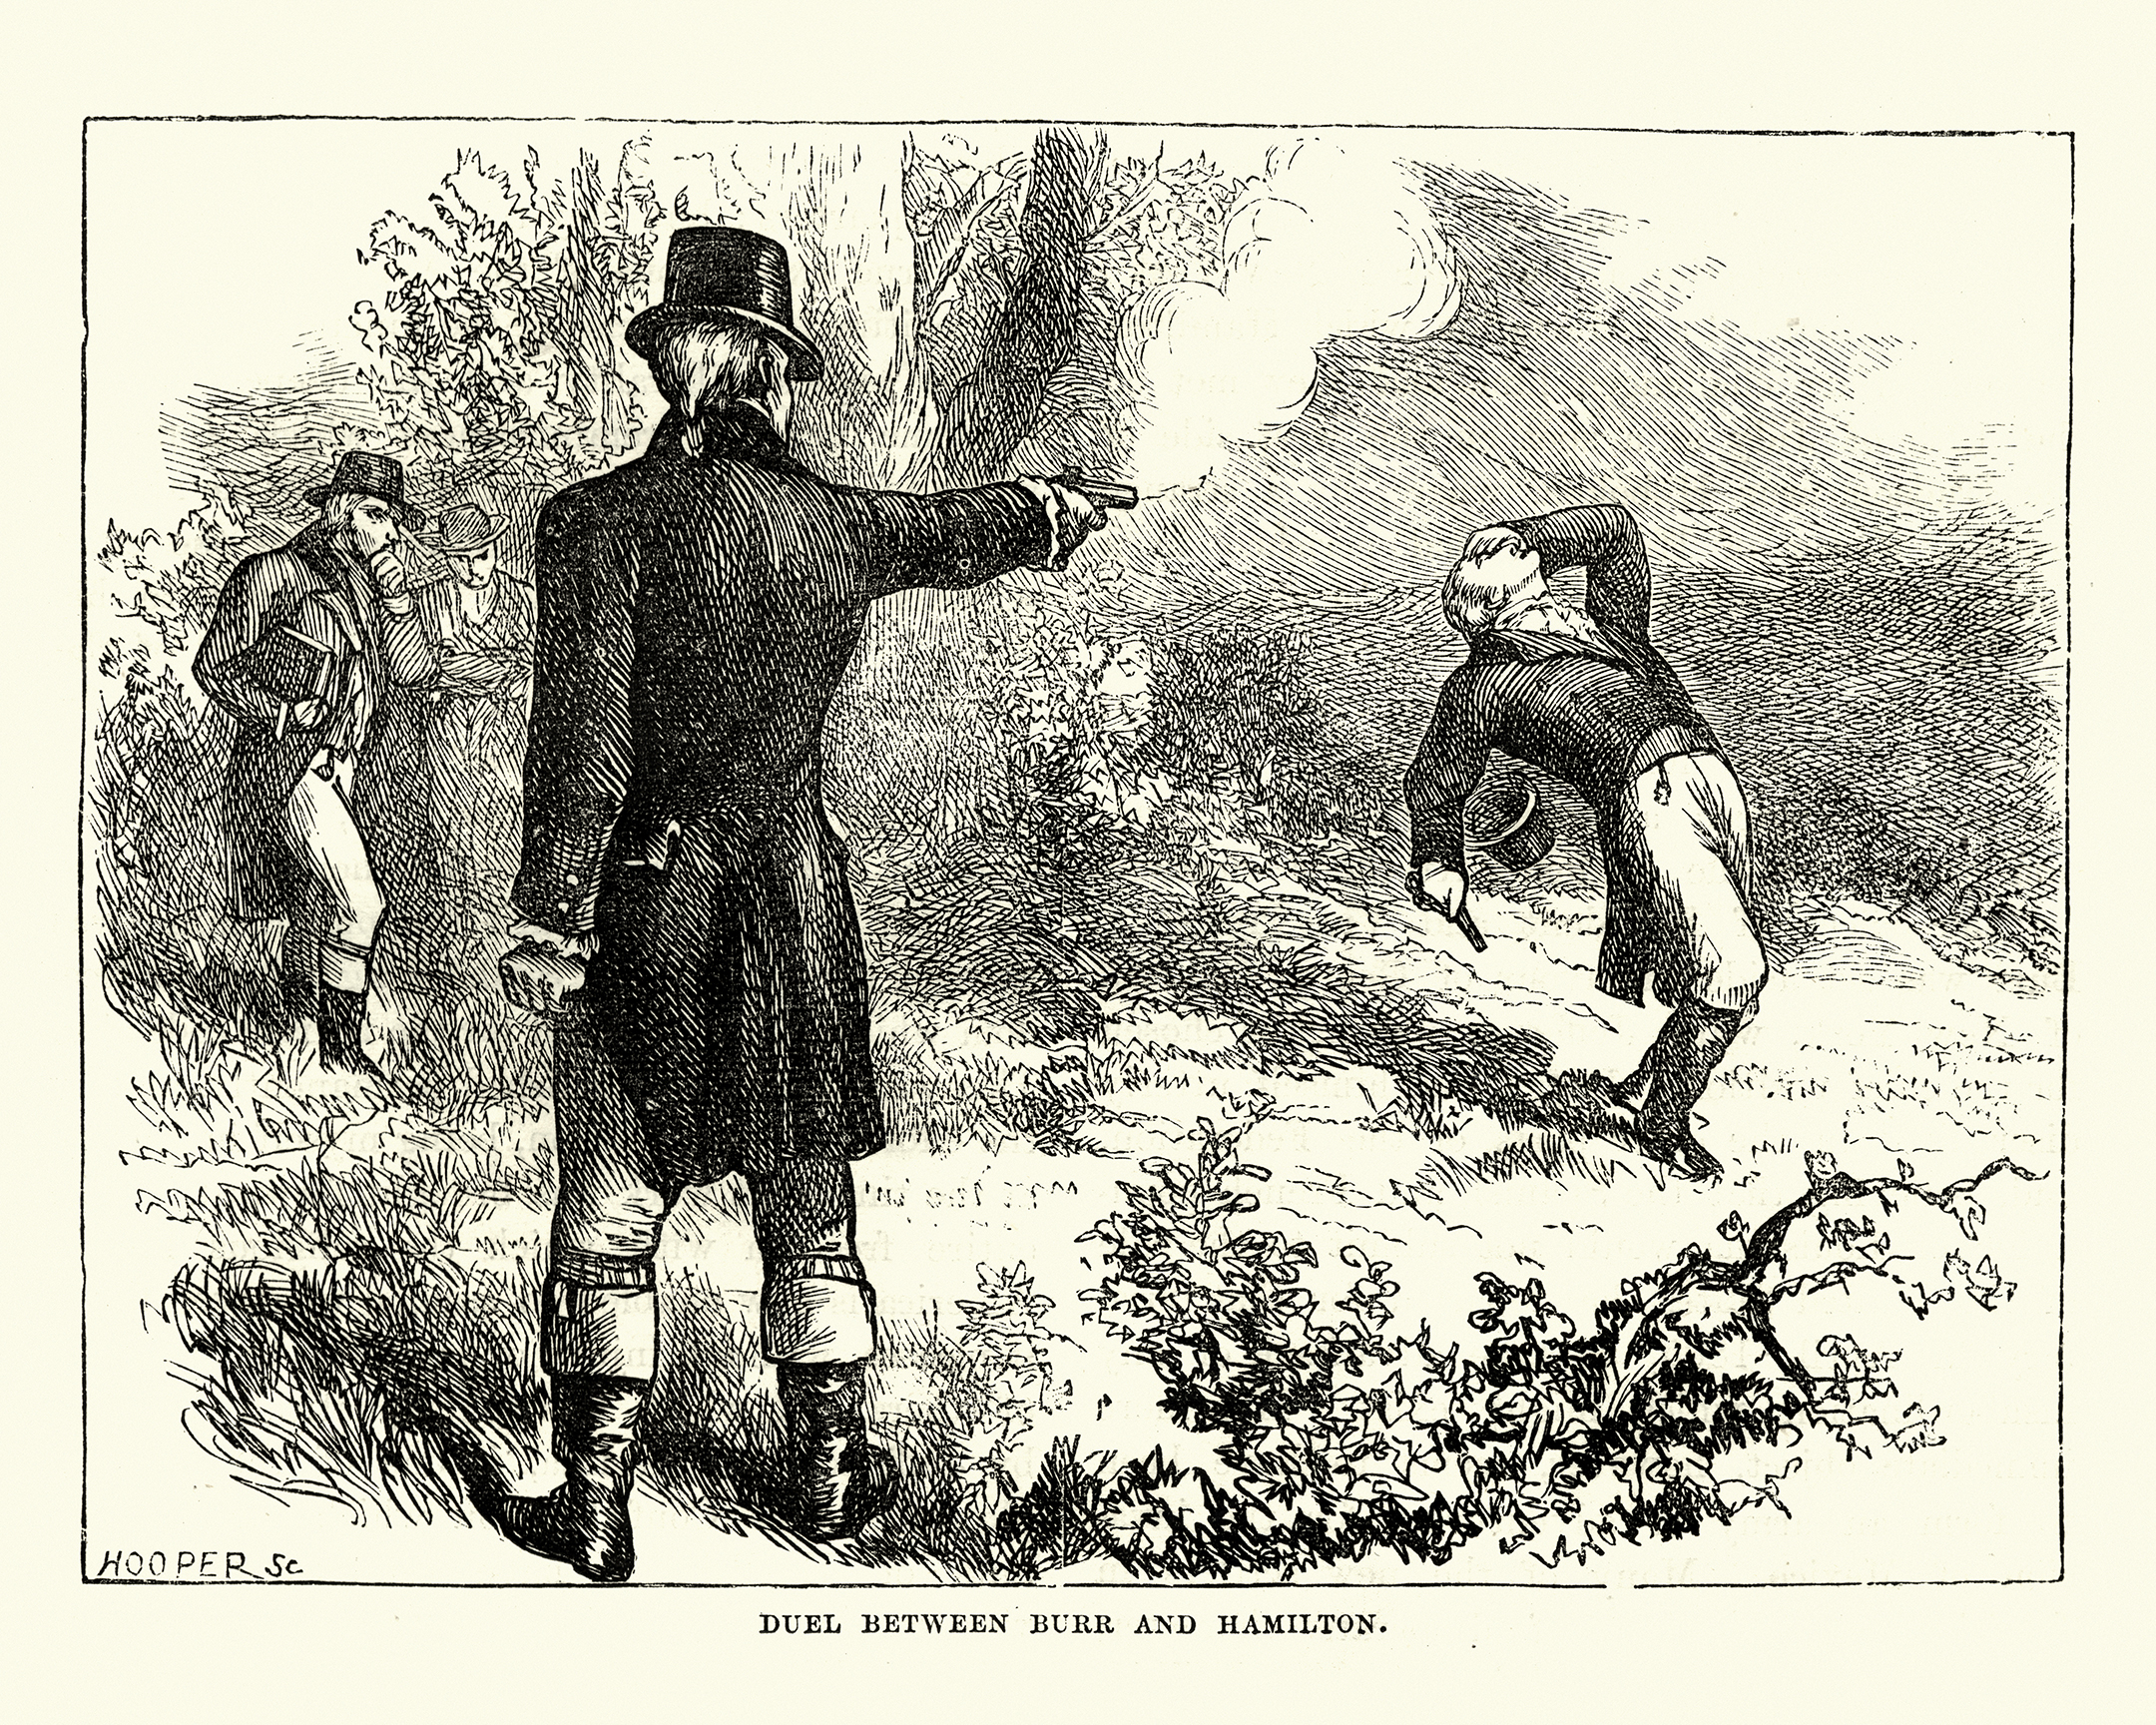 engraving showing aaron burr shooting alexander hamilton in a duel